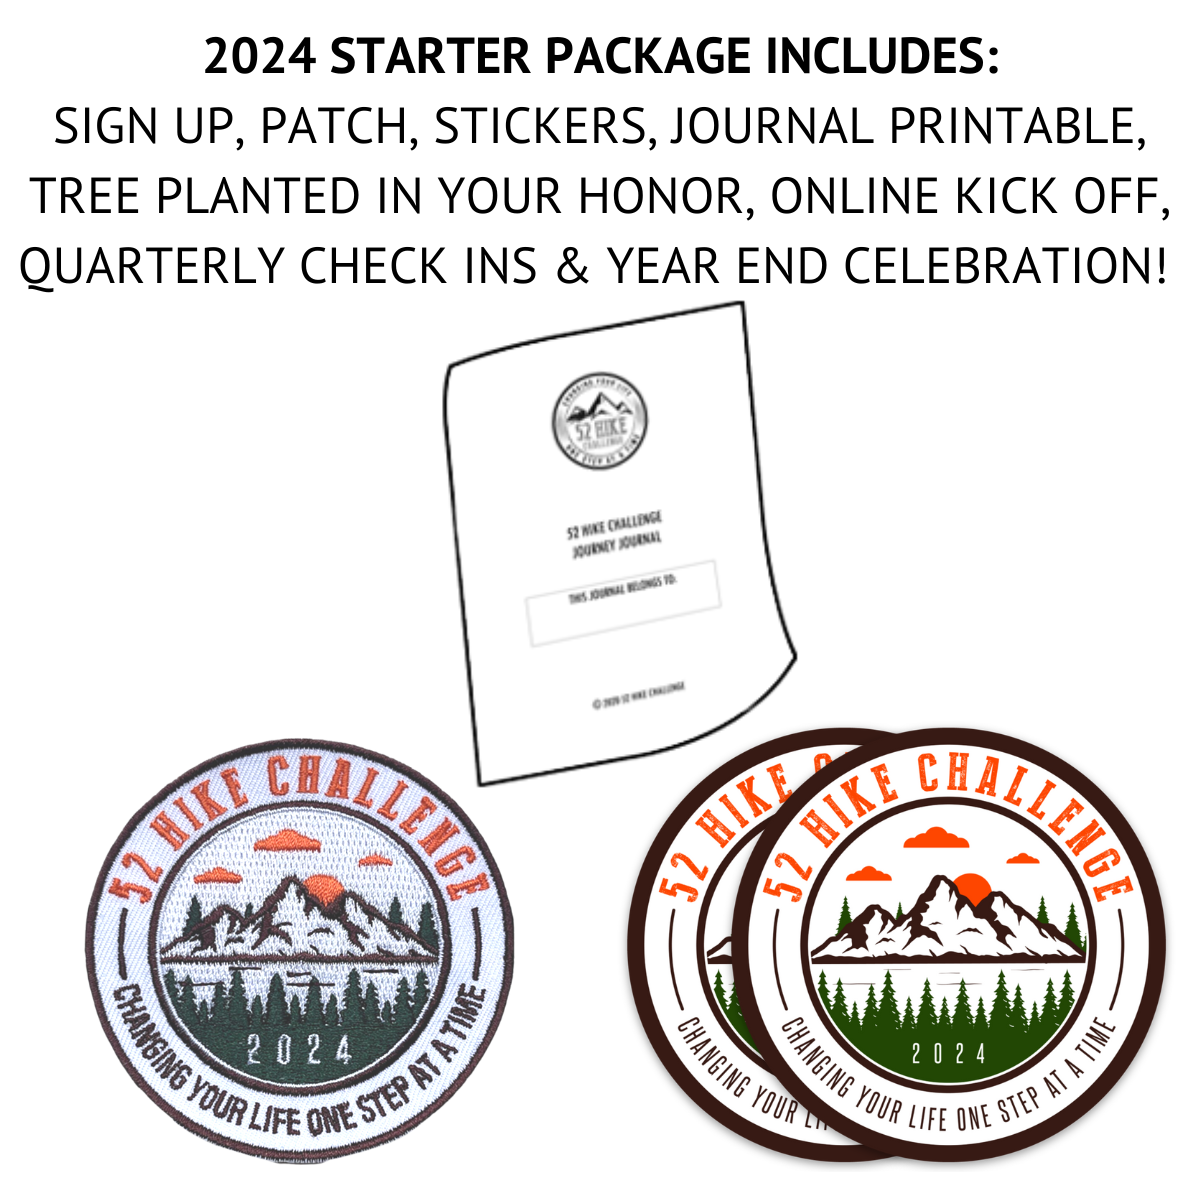 2024 52 Hike Challenge Sign Up + Starter Package